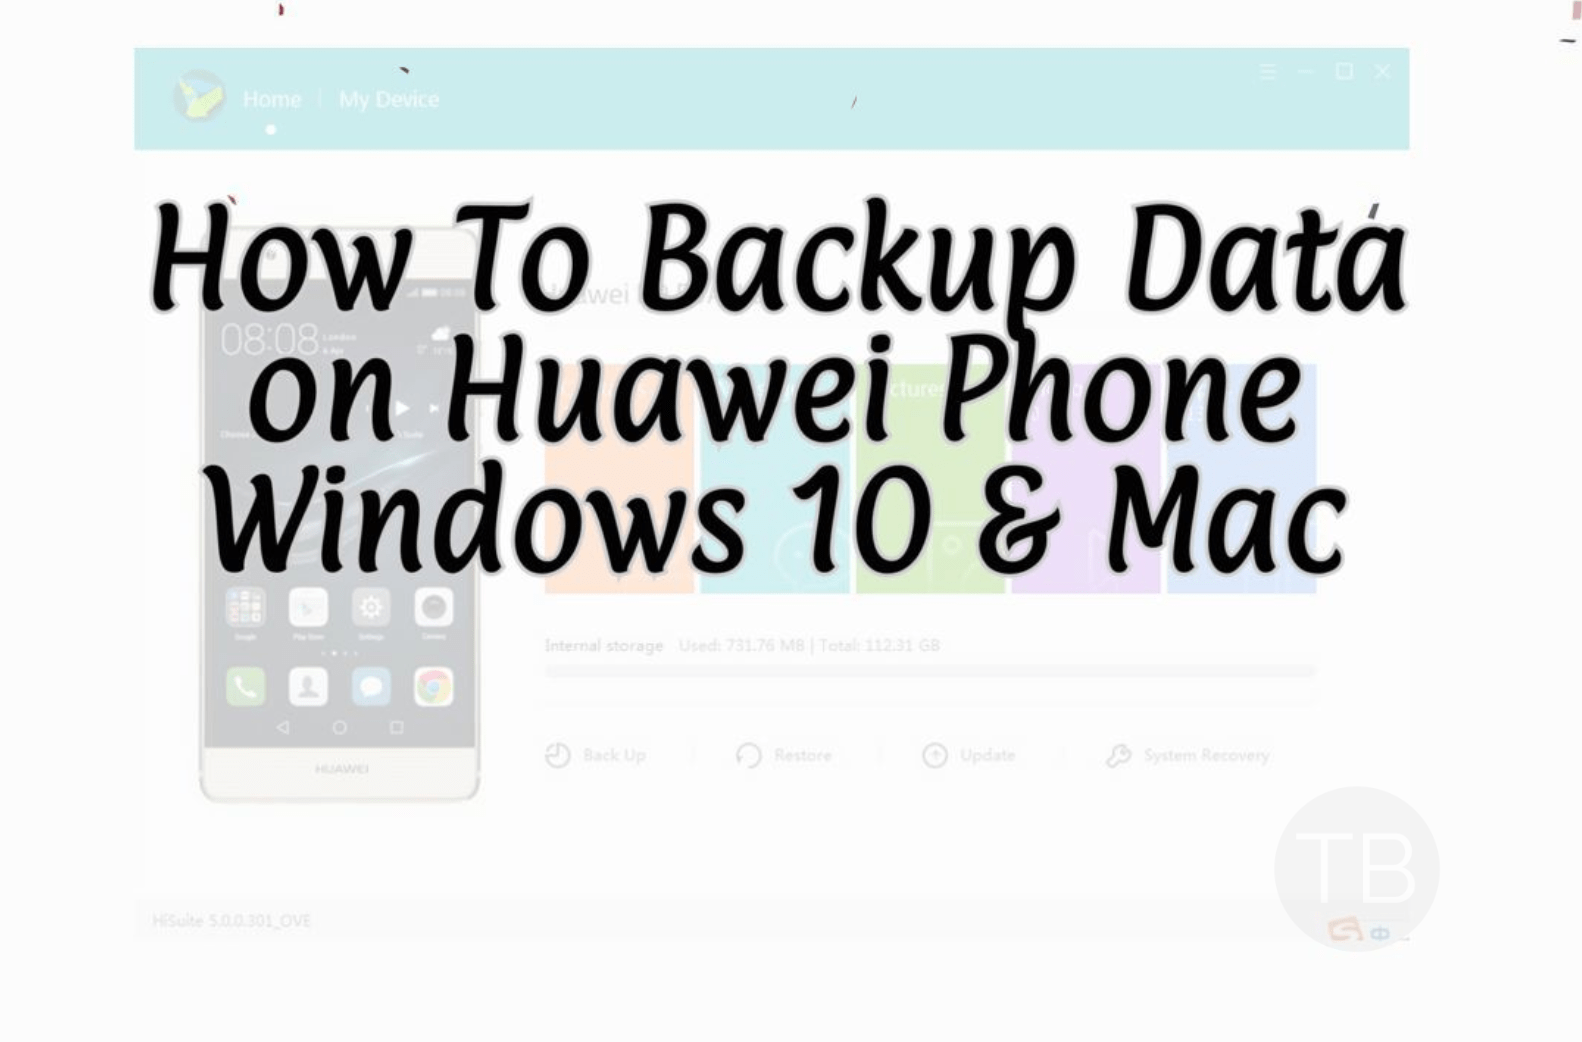 Huawei hisuite for windows